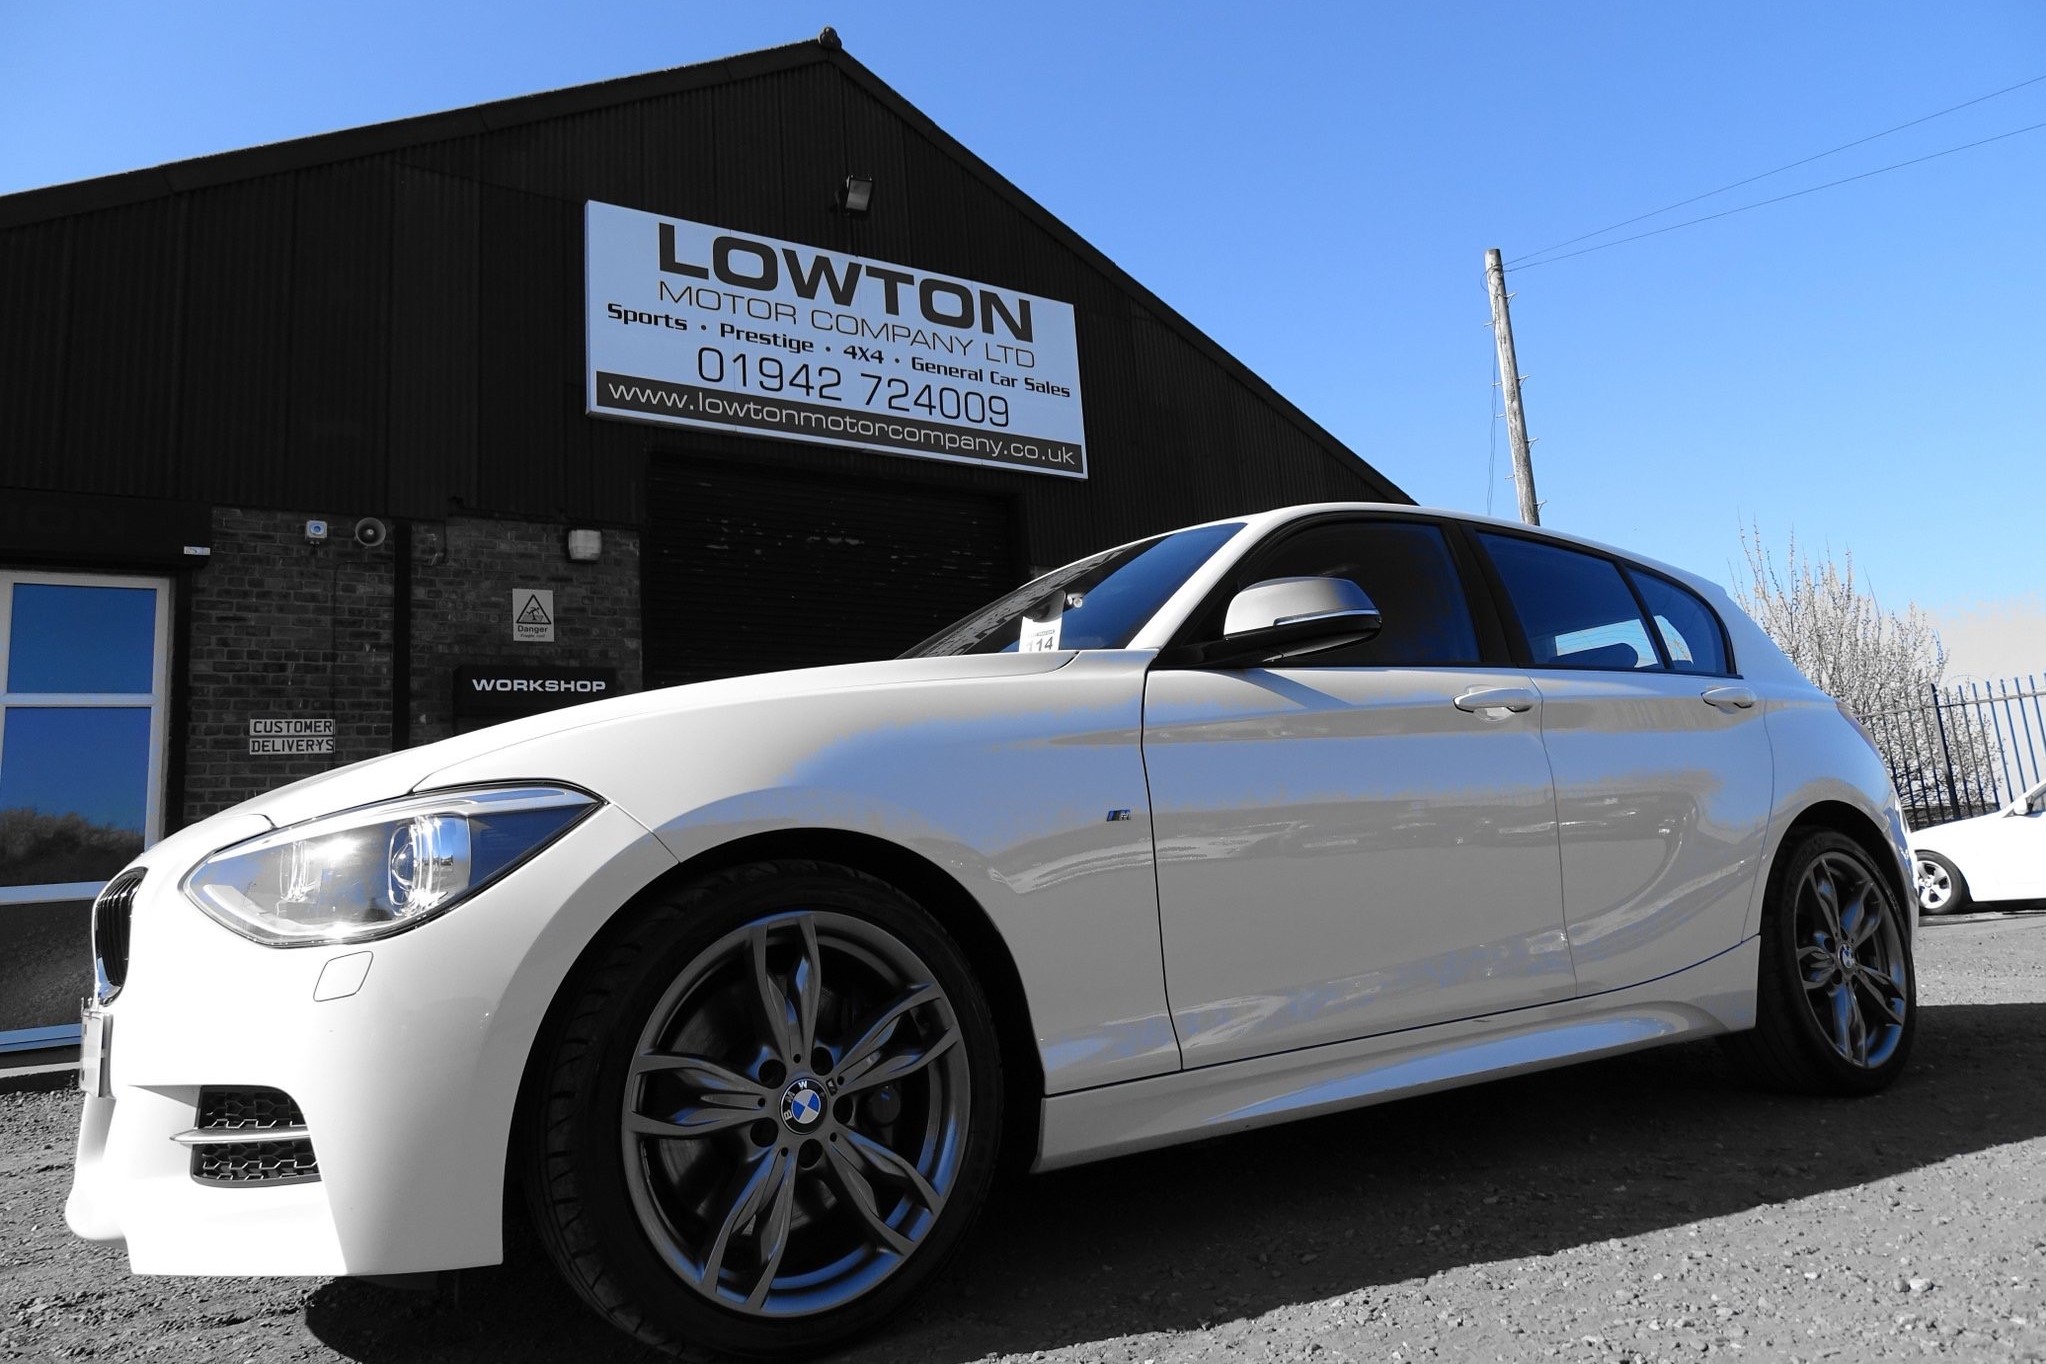 Lowton Motor Company 1